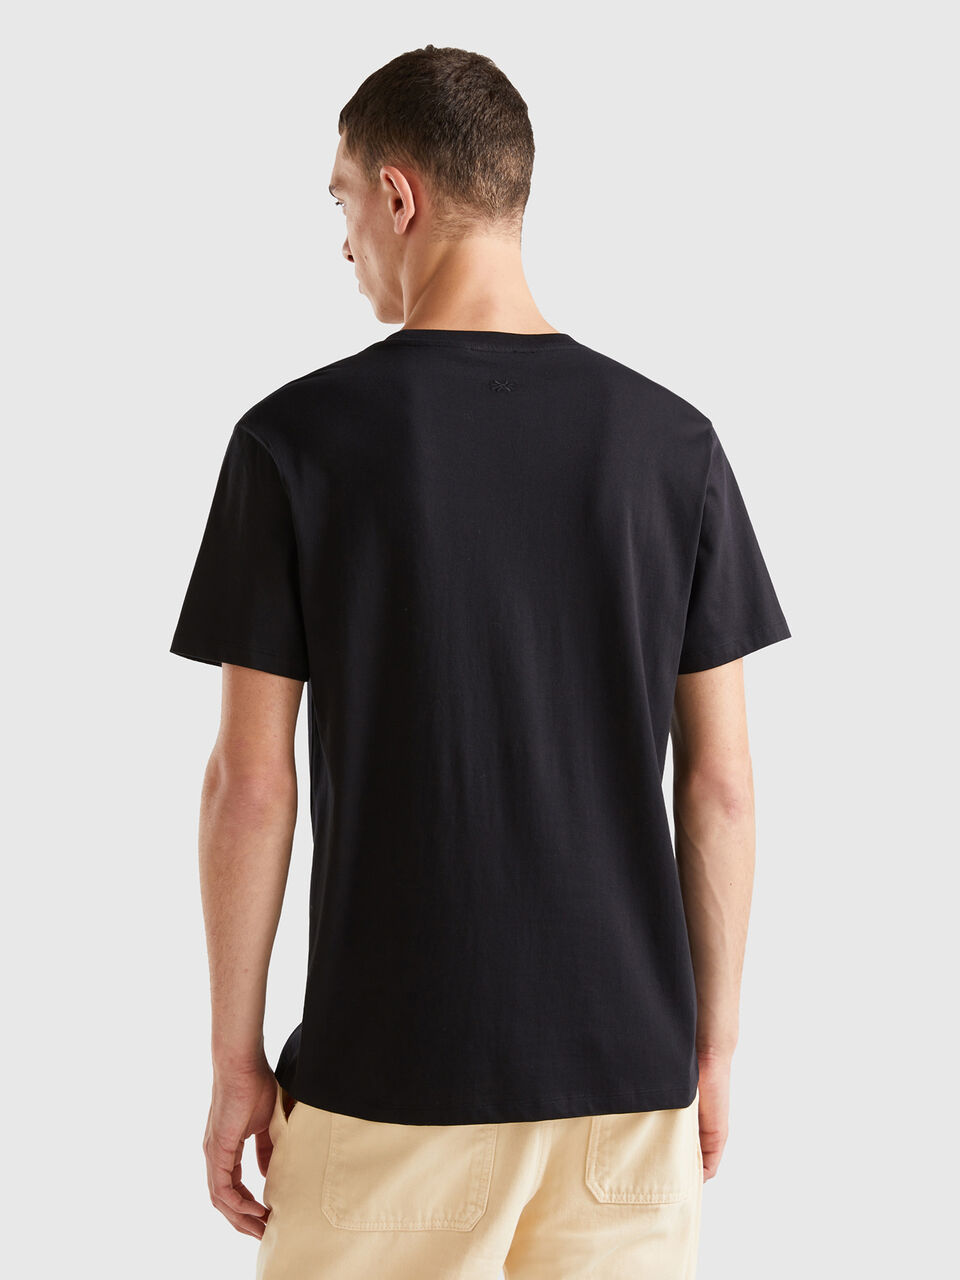 Black - t-shirt cotton Benetton 100% print | with